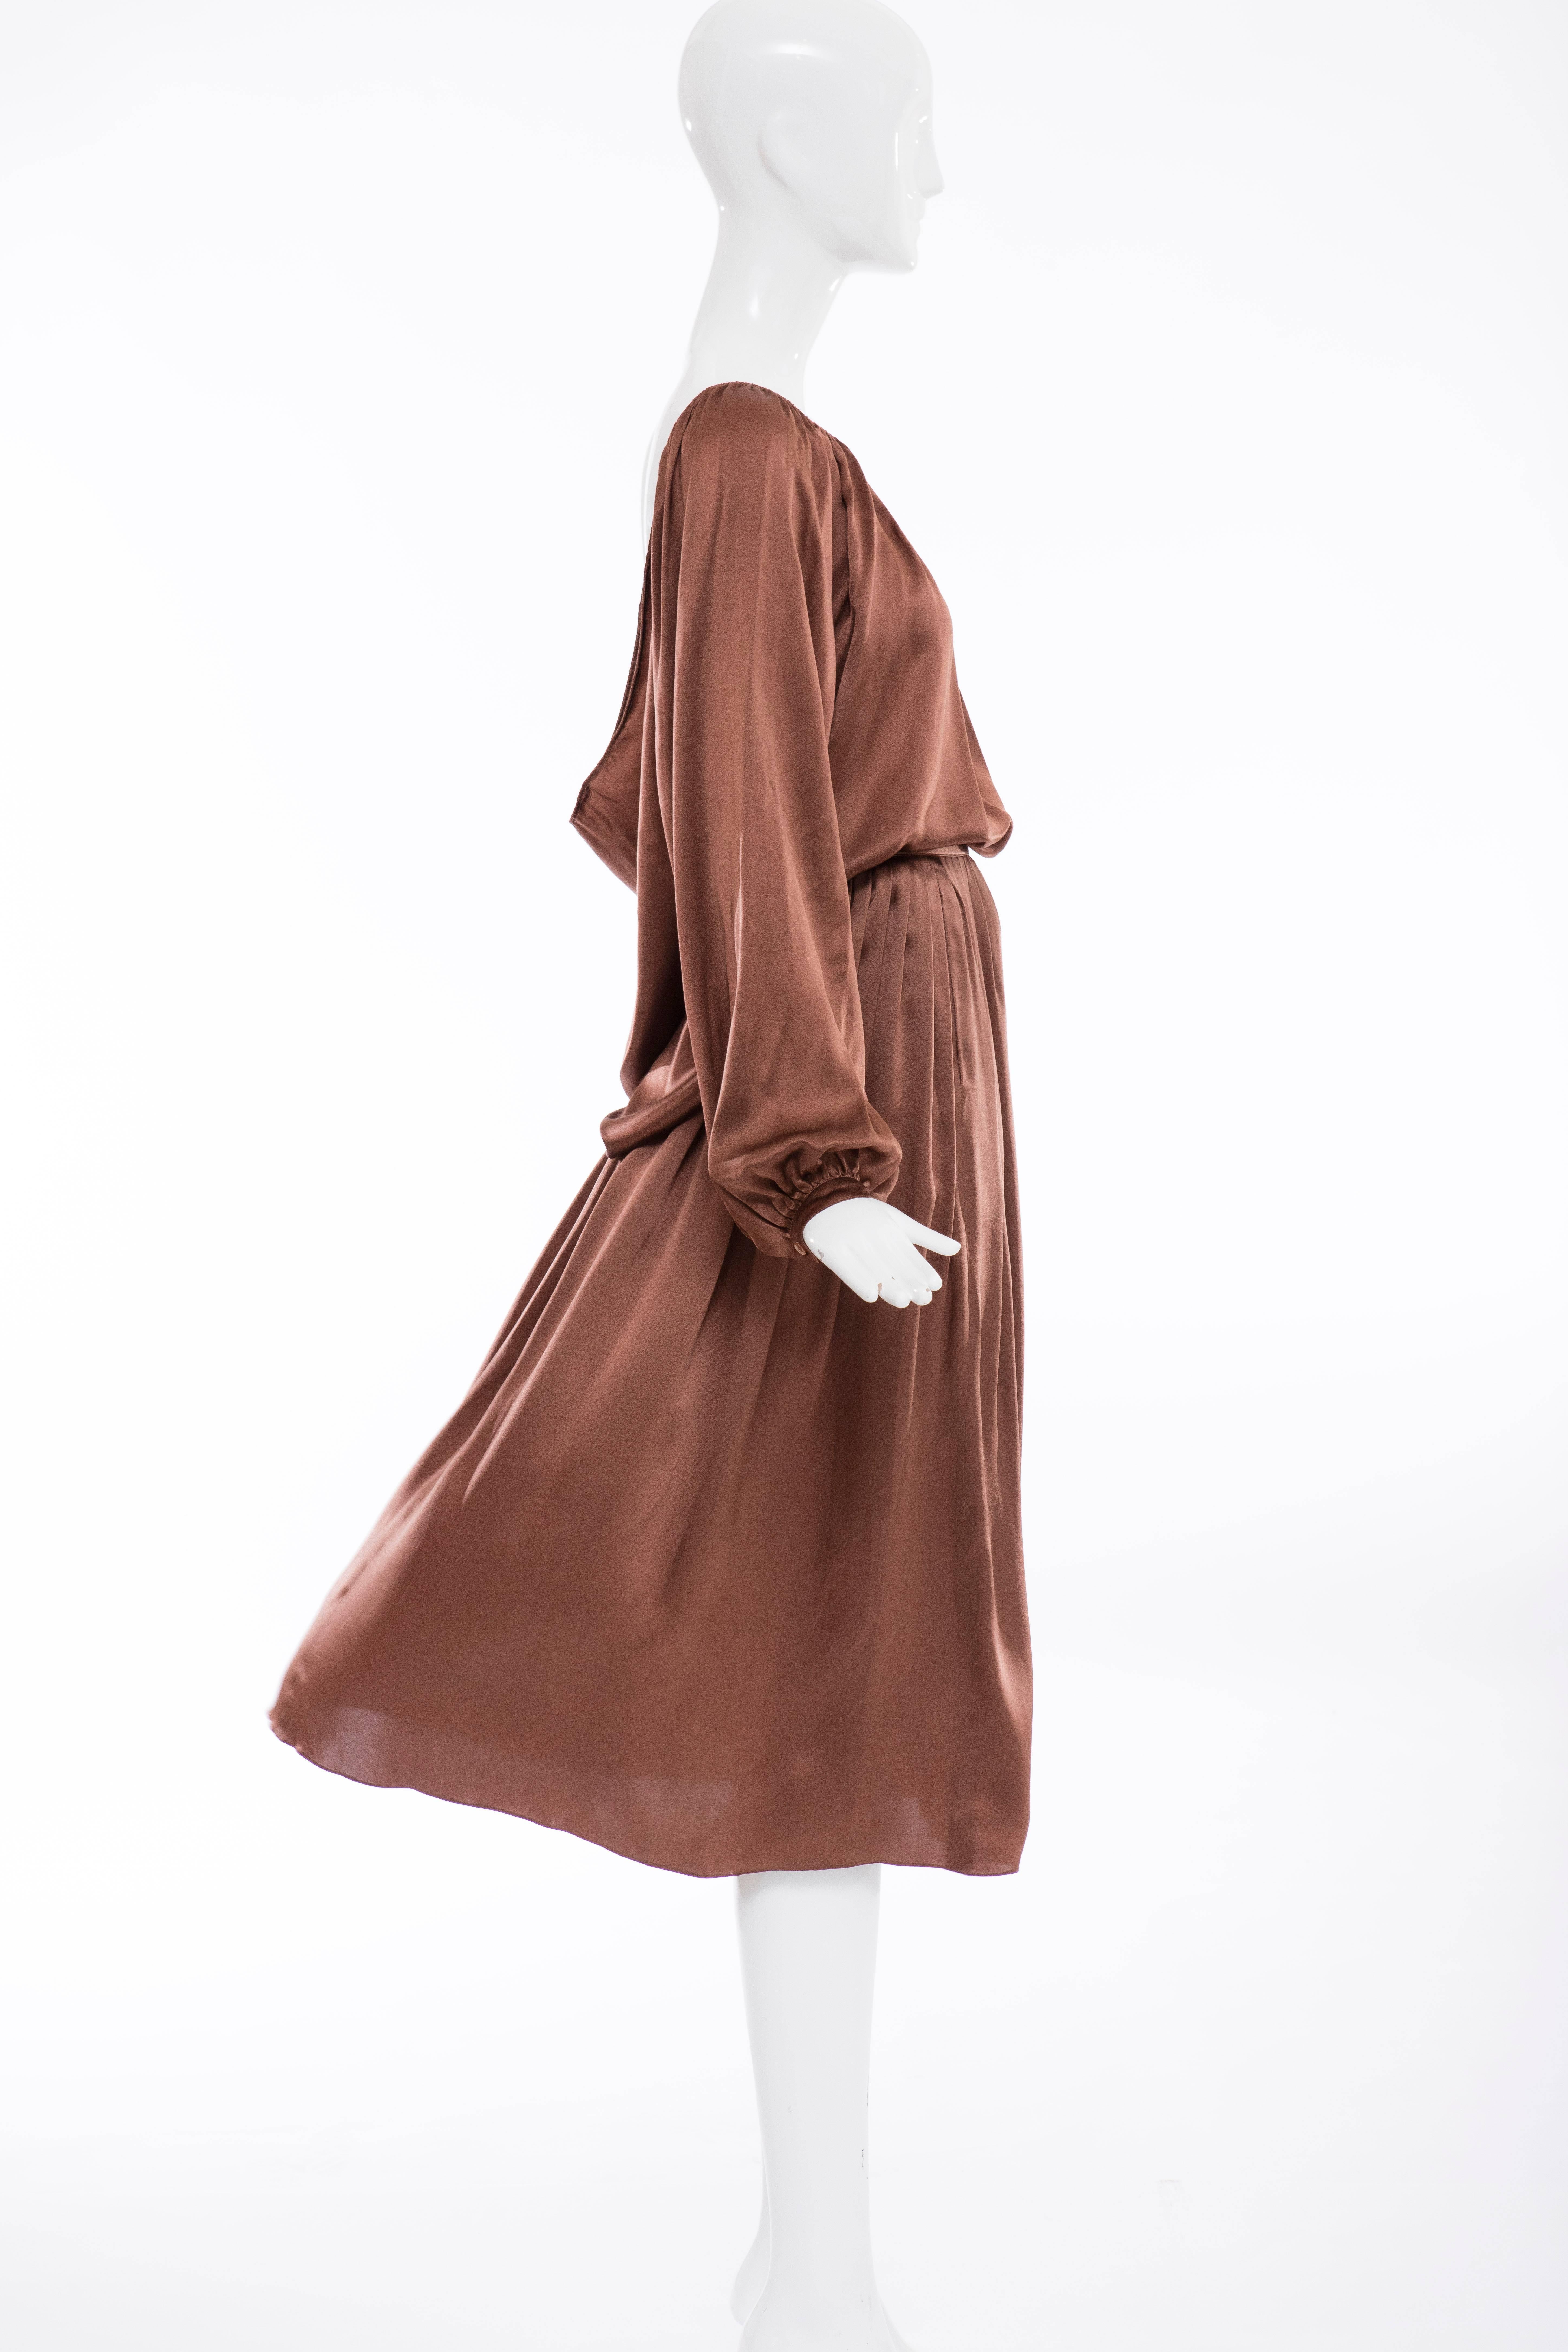 Calvin Klein Chocolate Brown Silk Charmeuse Skirt Suit, Circa 1970's For Sale 3